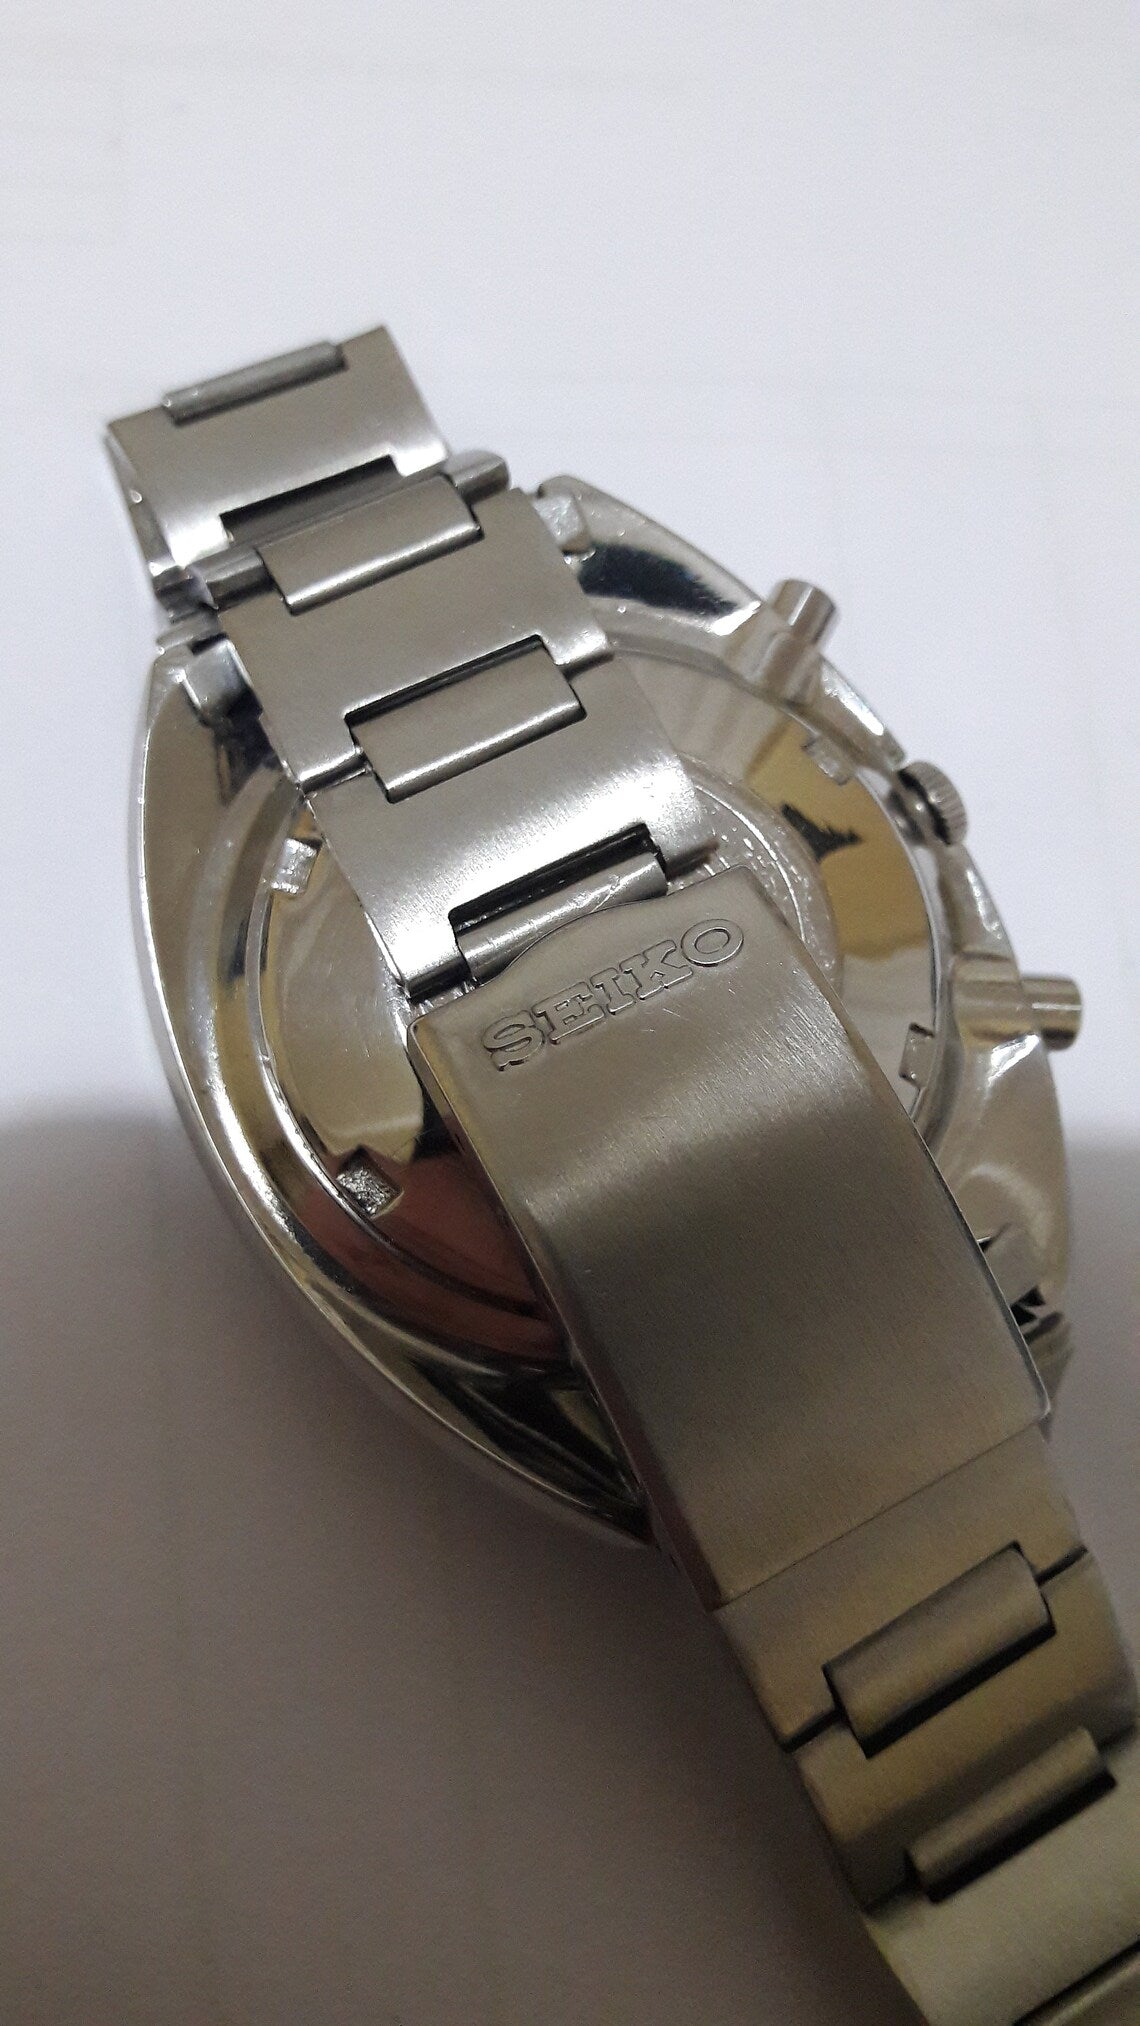 Seiko Pogue Pepsi bezel automatic chronograph collectable watch